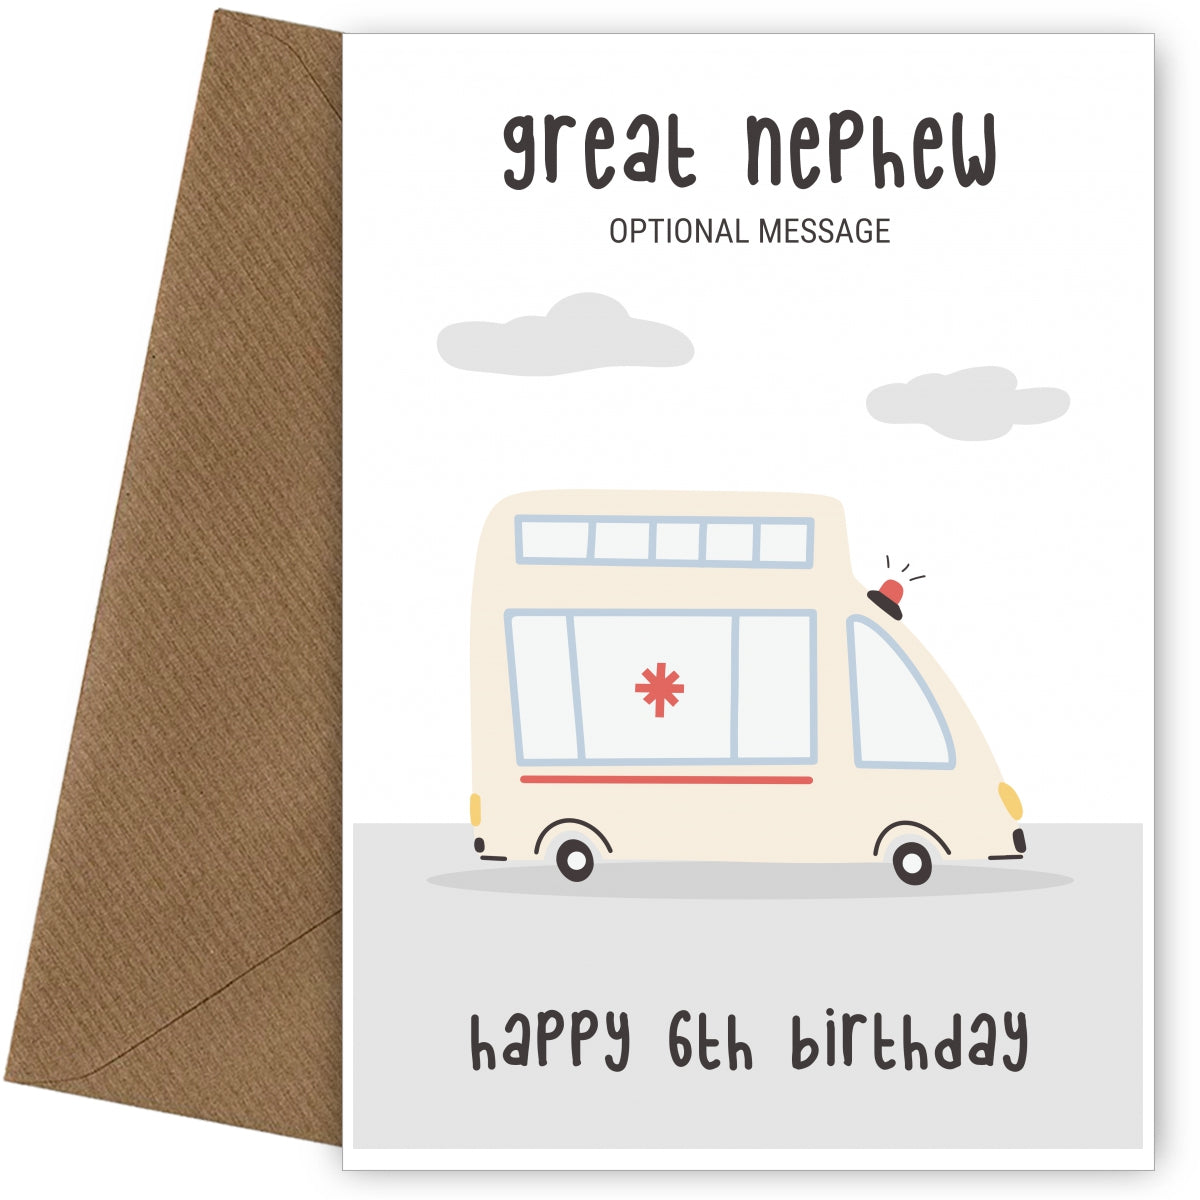 Fun Vehicles 6th Birthday Card for Great Nephew - Ambulance